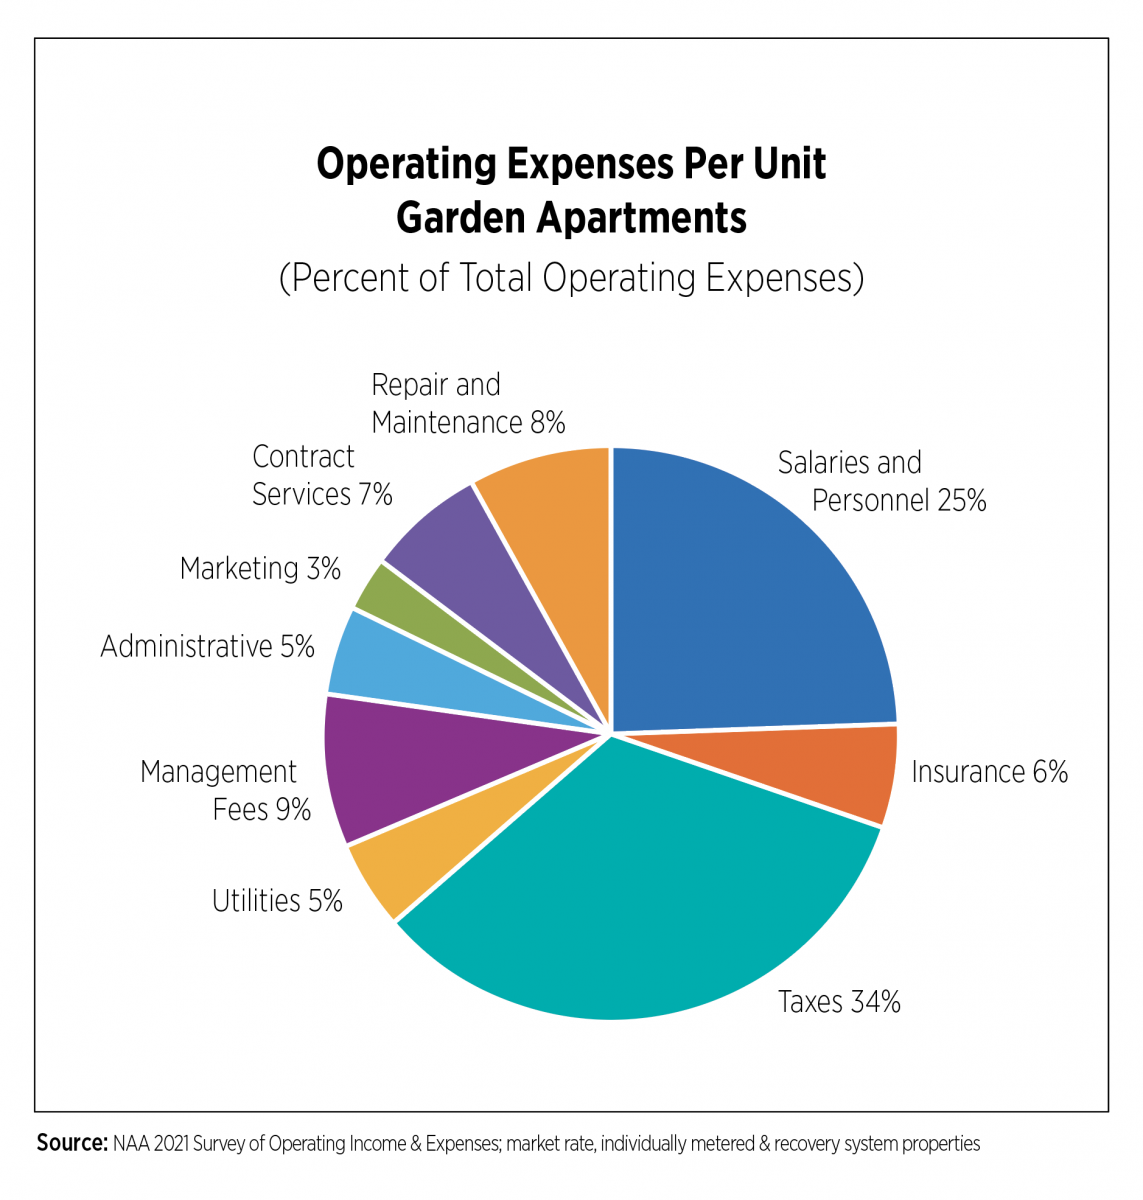 Operating Expenses per Unit - Garden Apartments